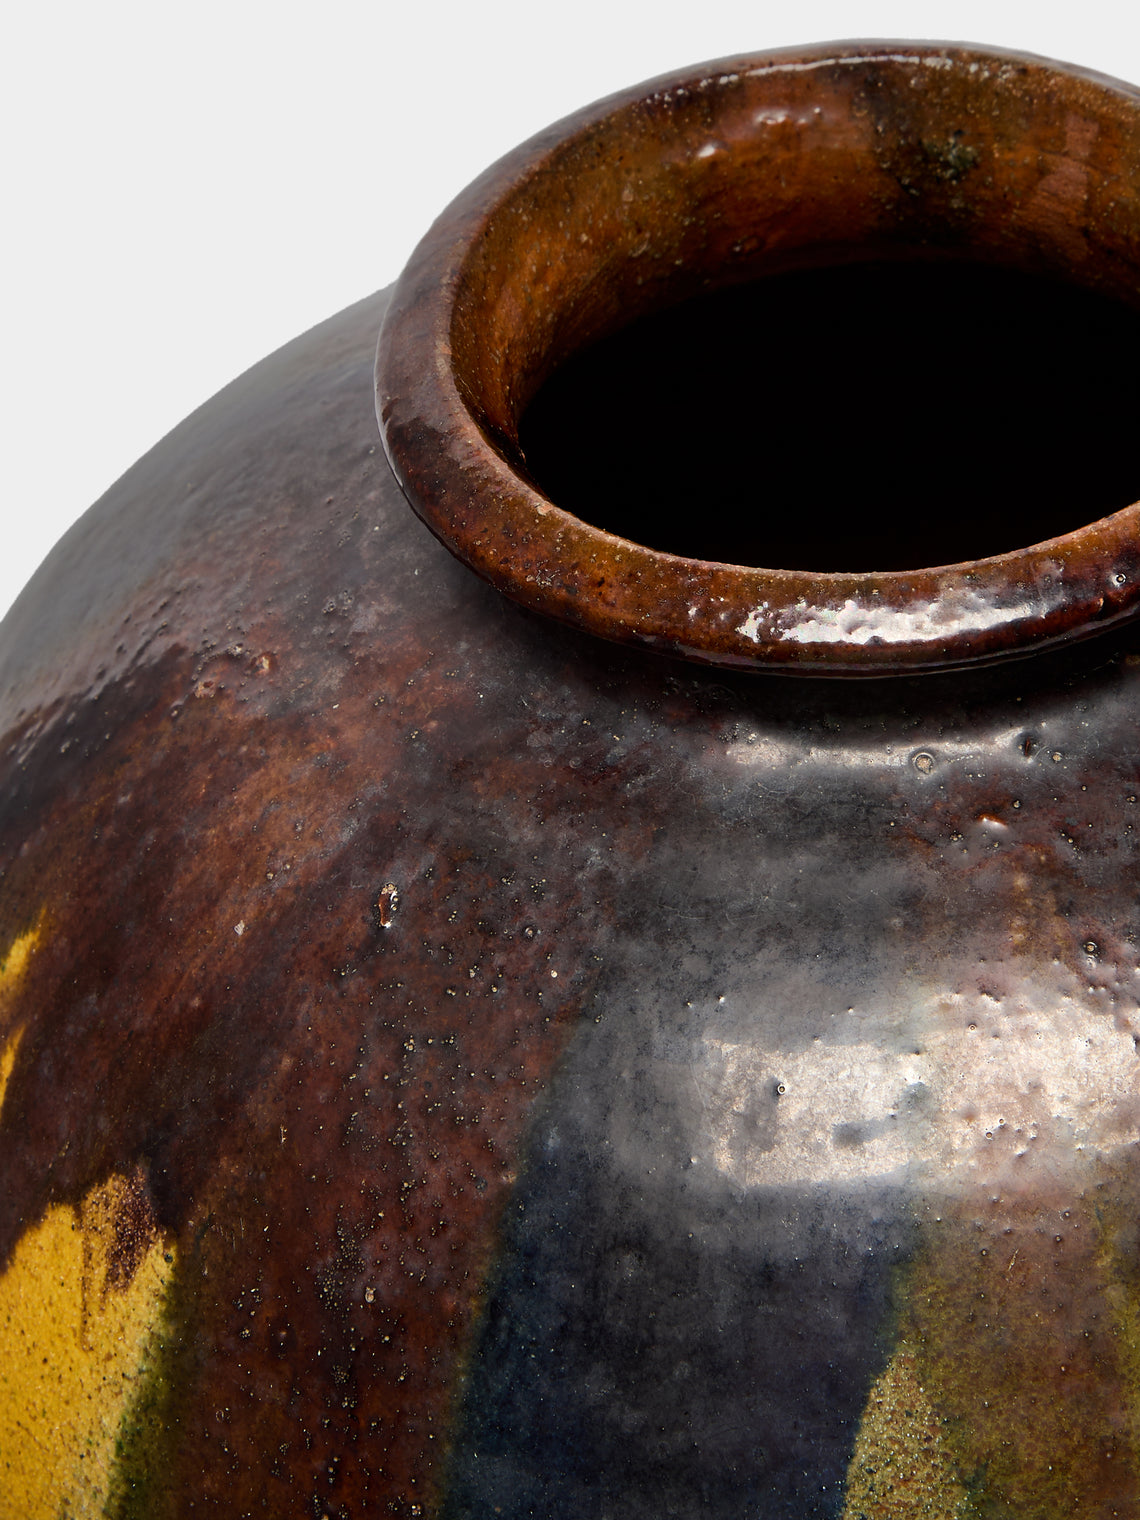 Antique and Vintage - 1950s French Ceramic Vase -  - ABASK